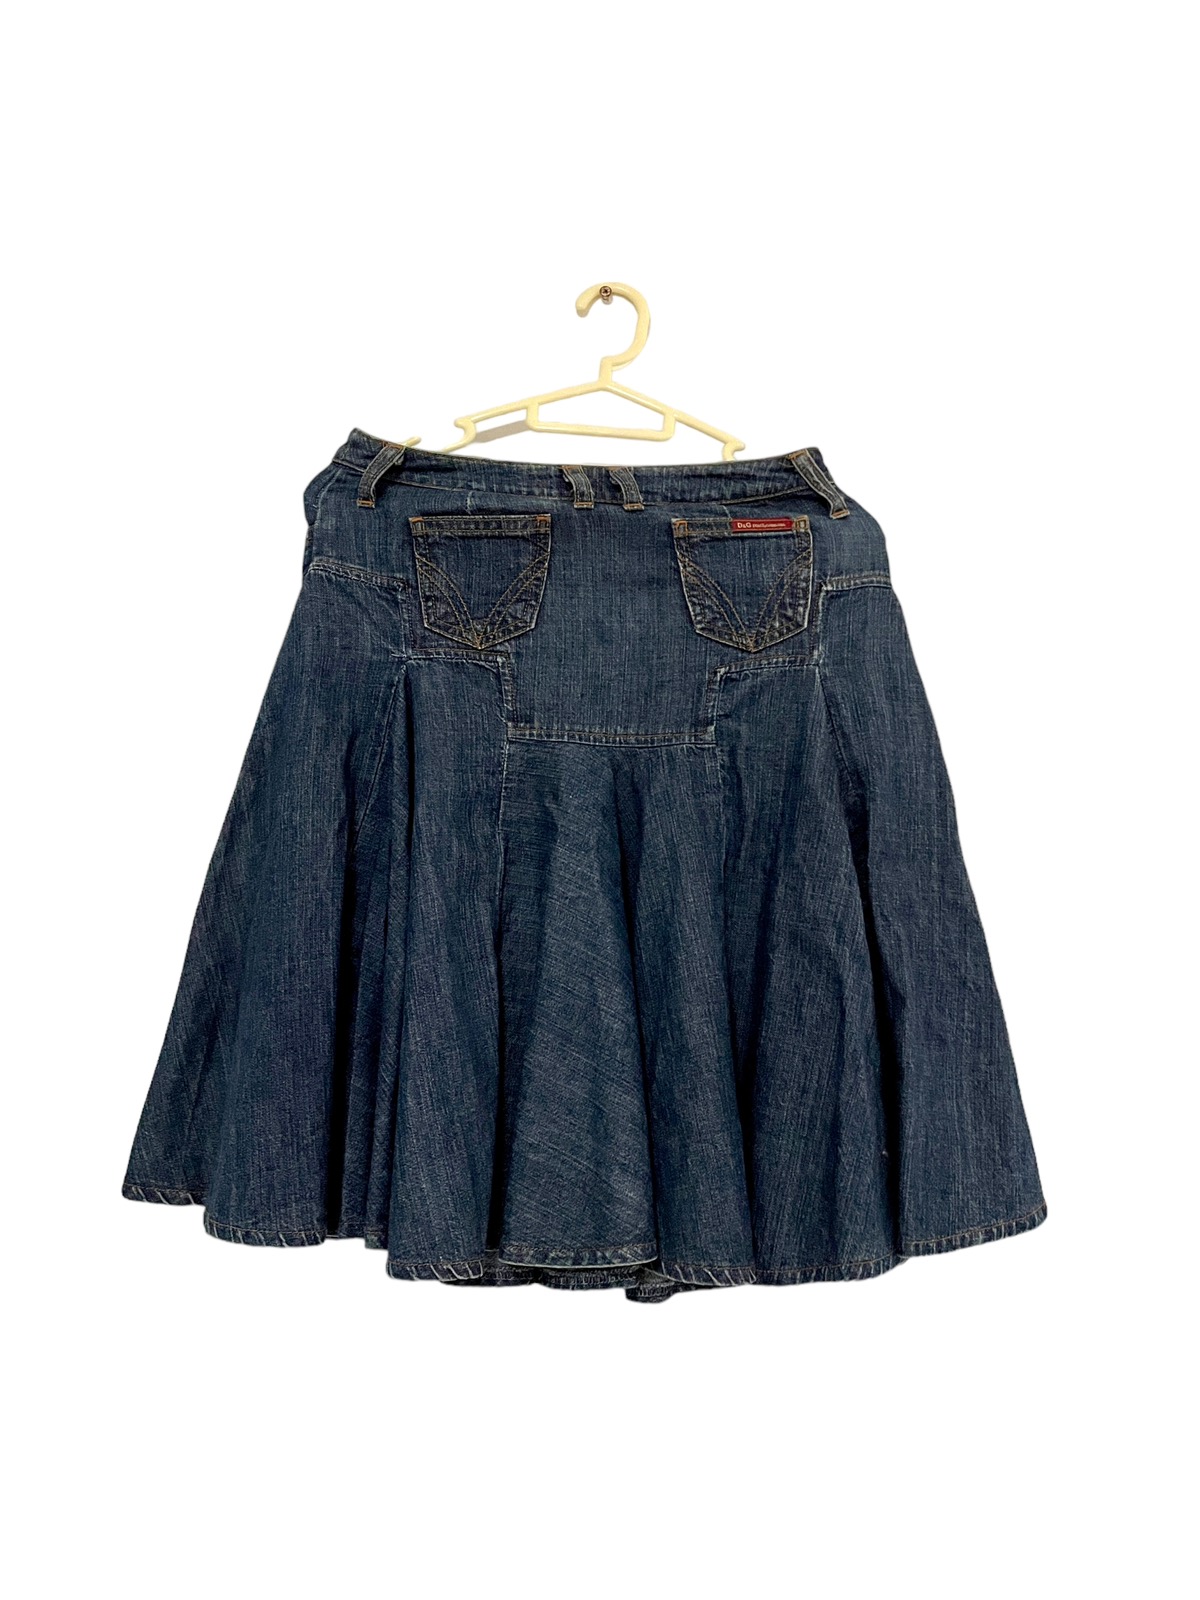 D&G Denim Circle Flare Skirt - 4